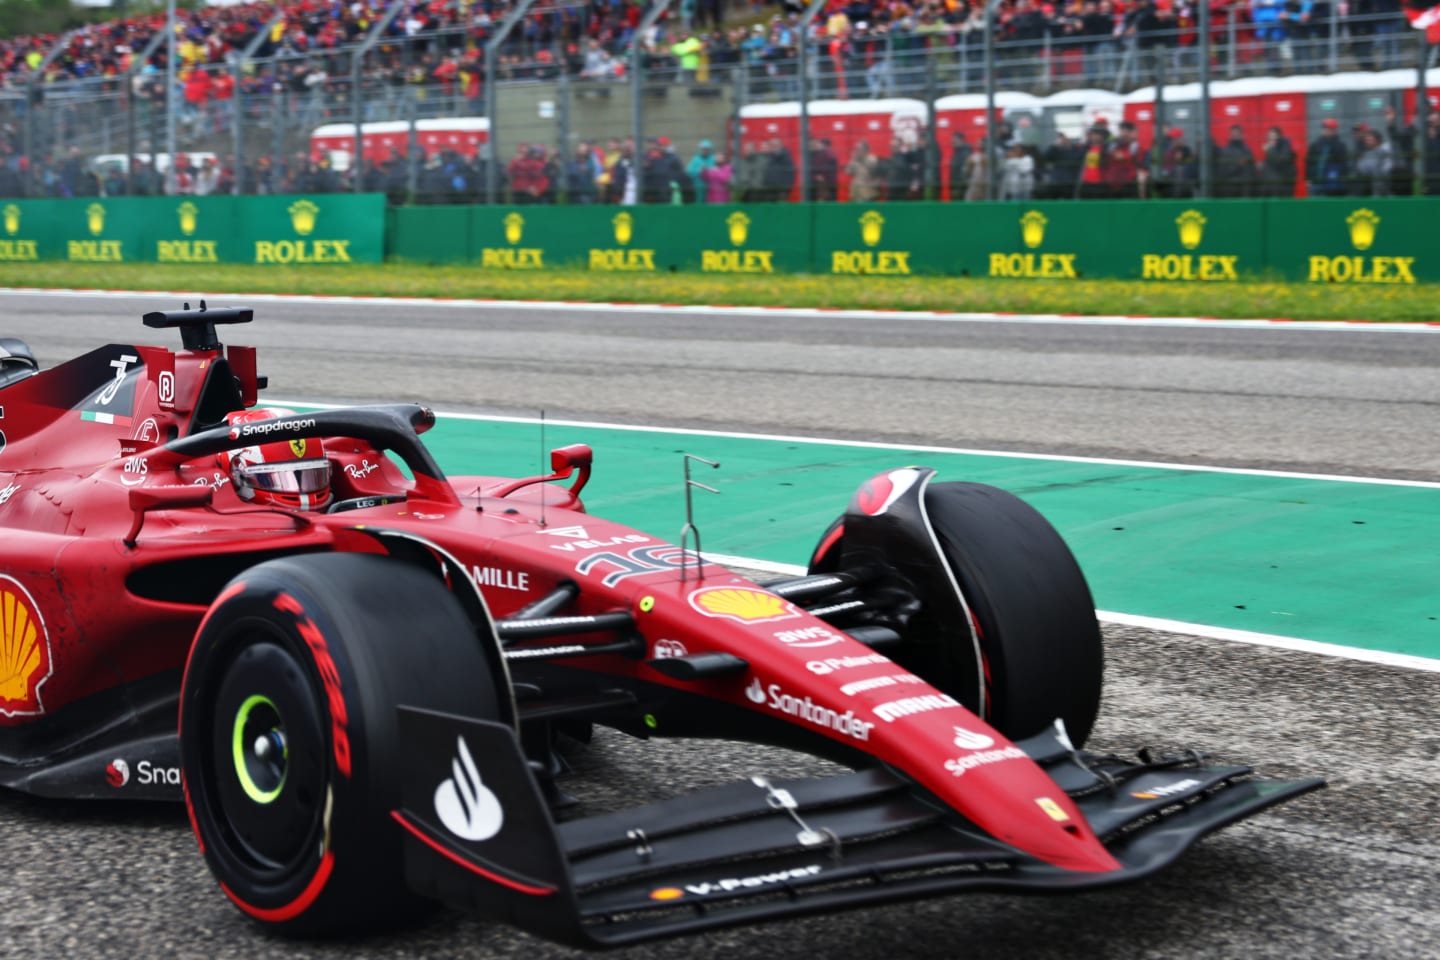 IMOLA, ITALY - APRIL 24: Charles Leclerc of Monaco driving (16) the Ferrari F1-75 enters the pits